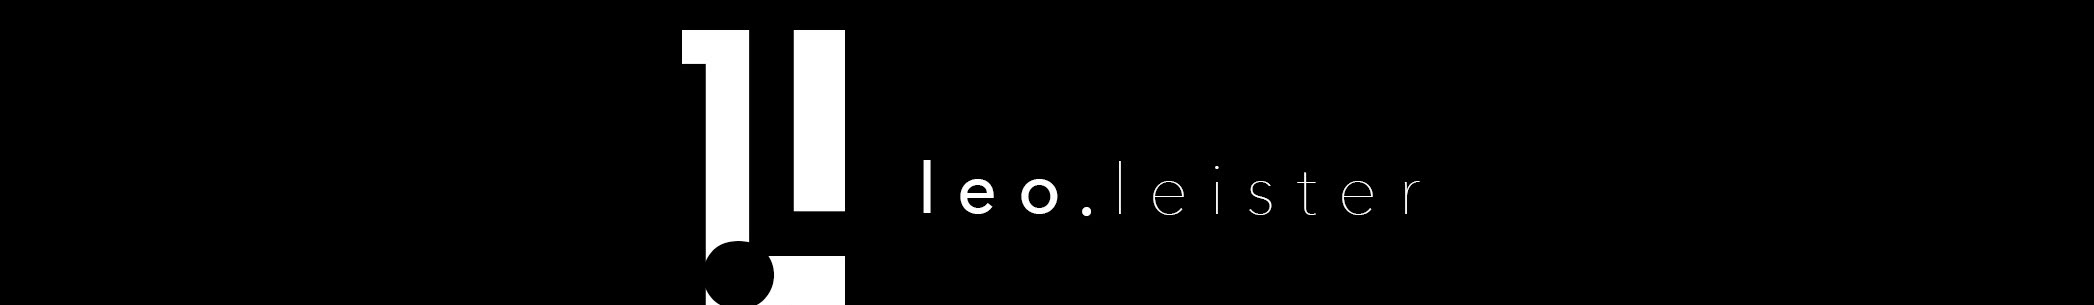 Leo Leister's profile banner